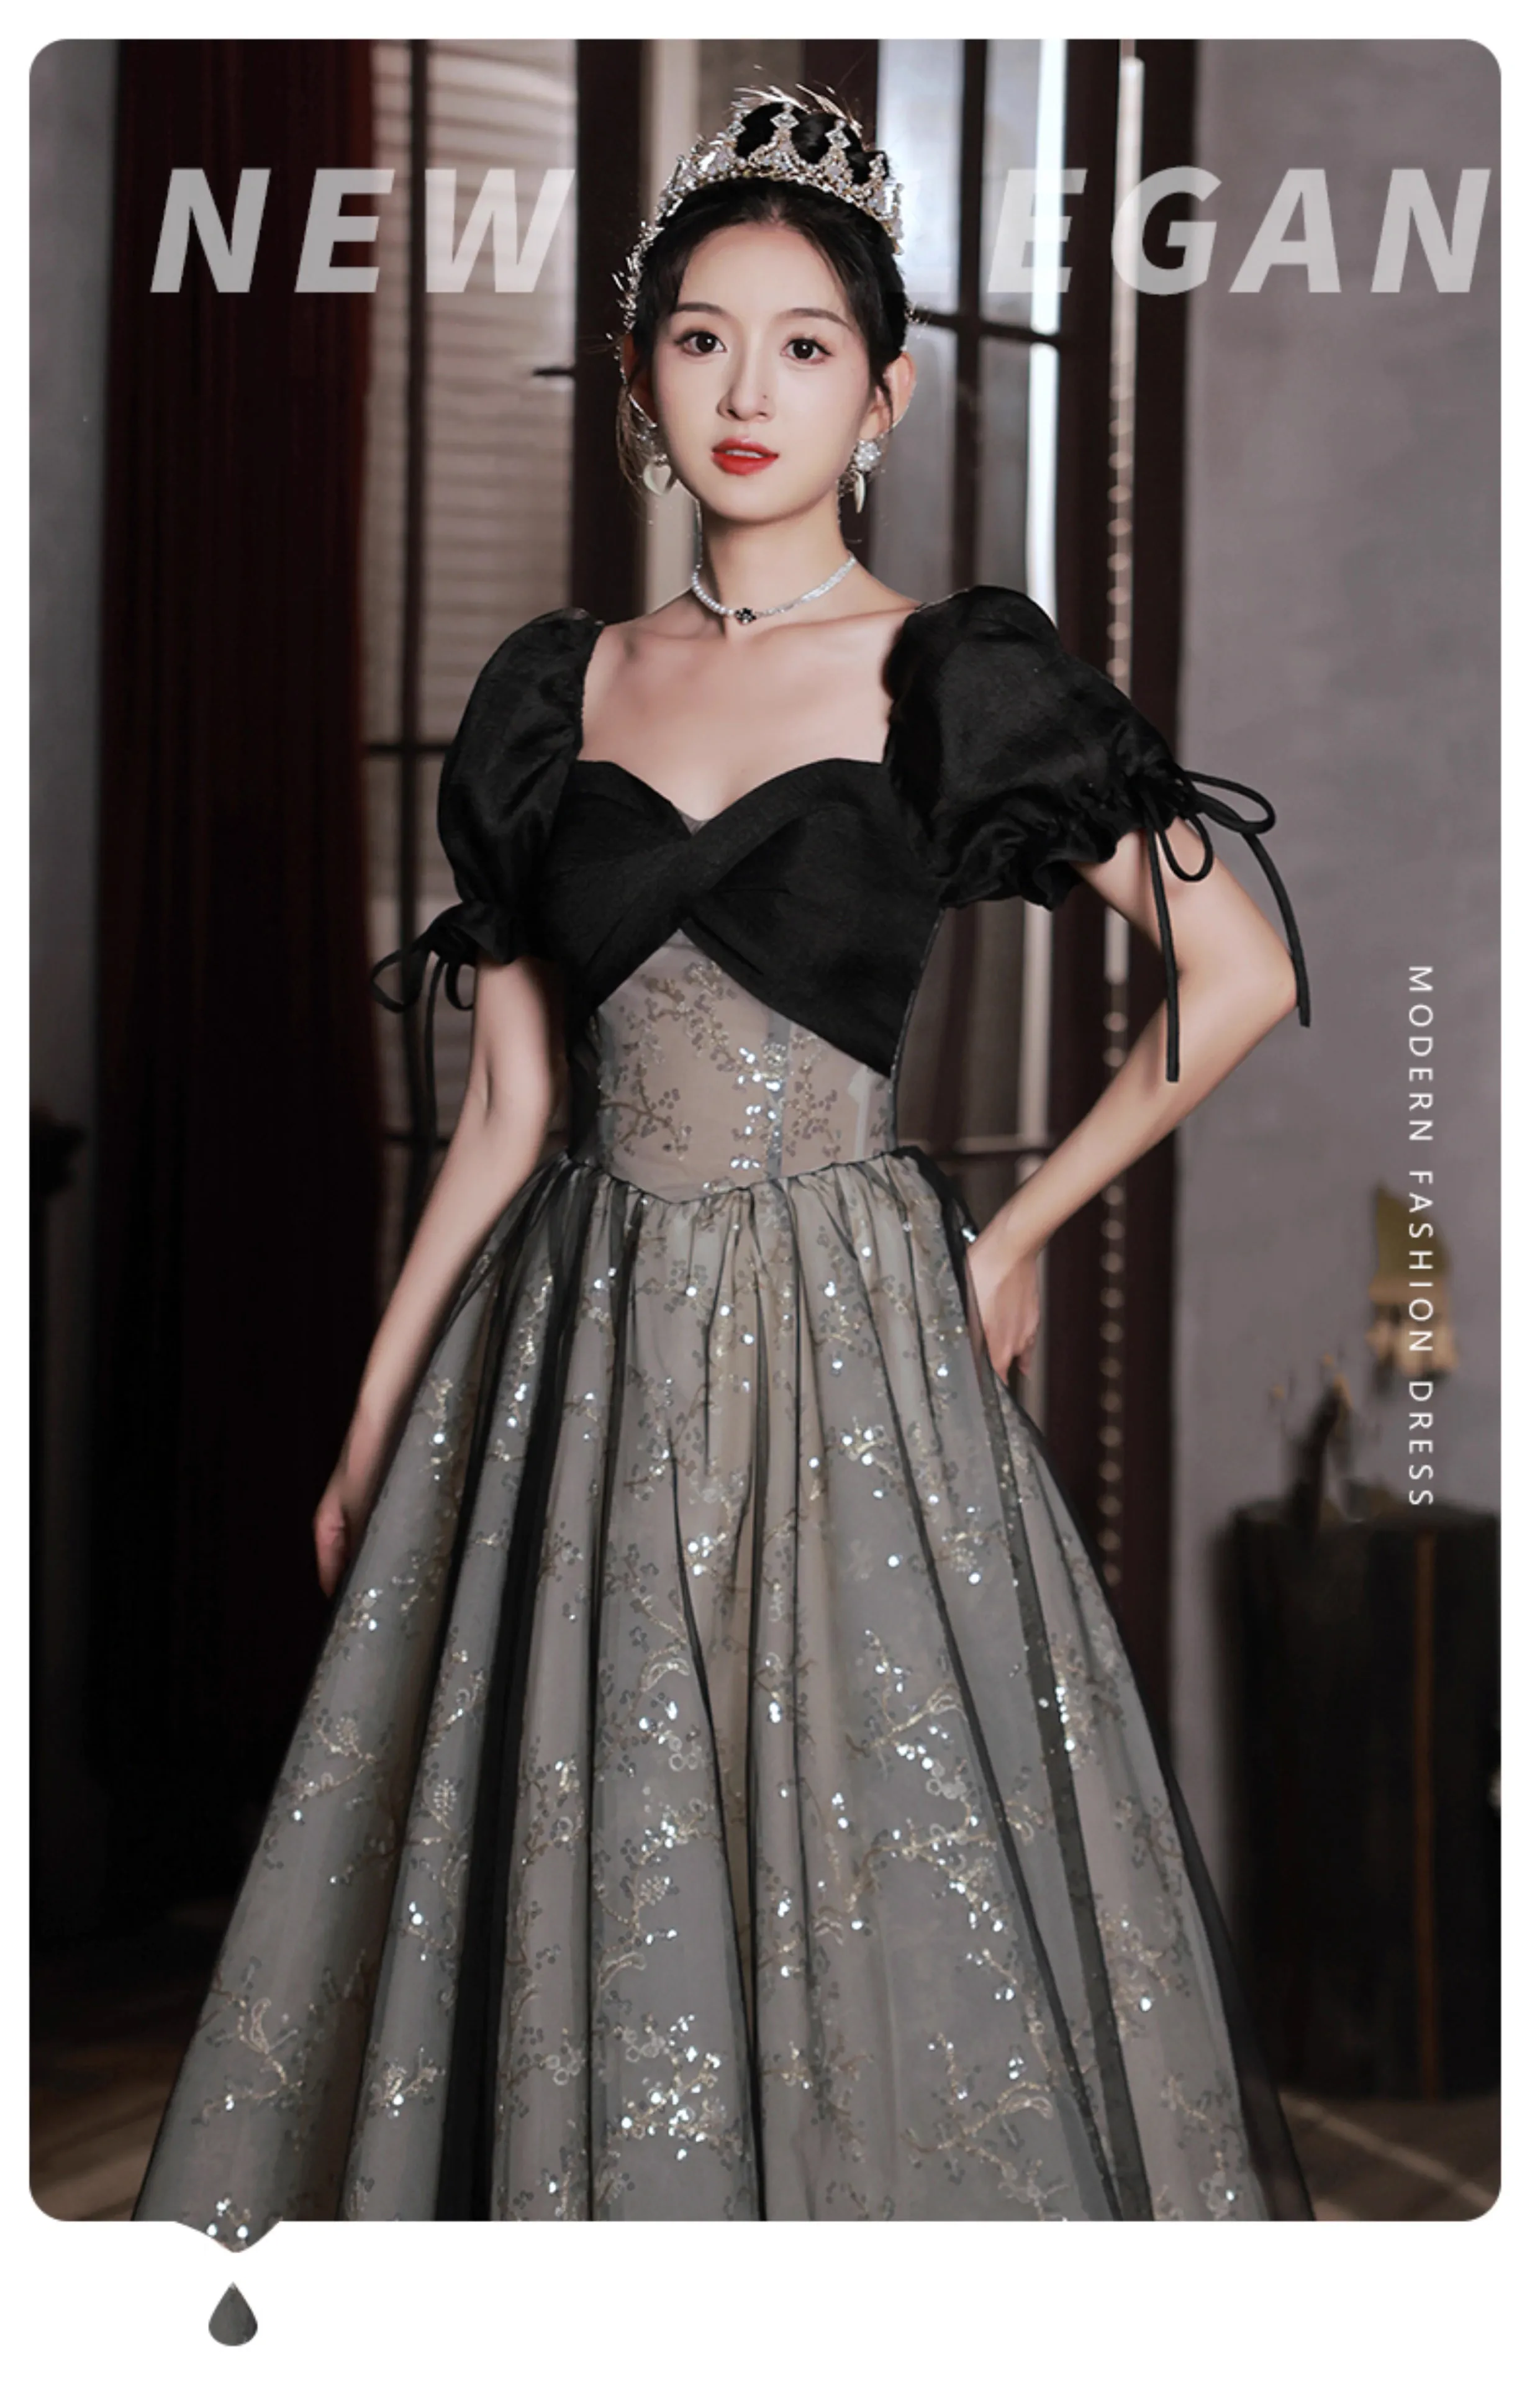 Fashion-Black-Off-the-Shoulder-Audrey-Hepburn-Style-Cocktail-Party-Dress06